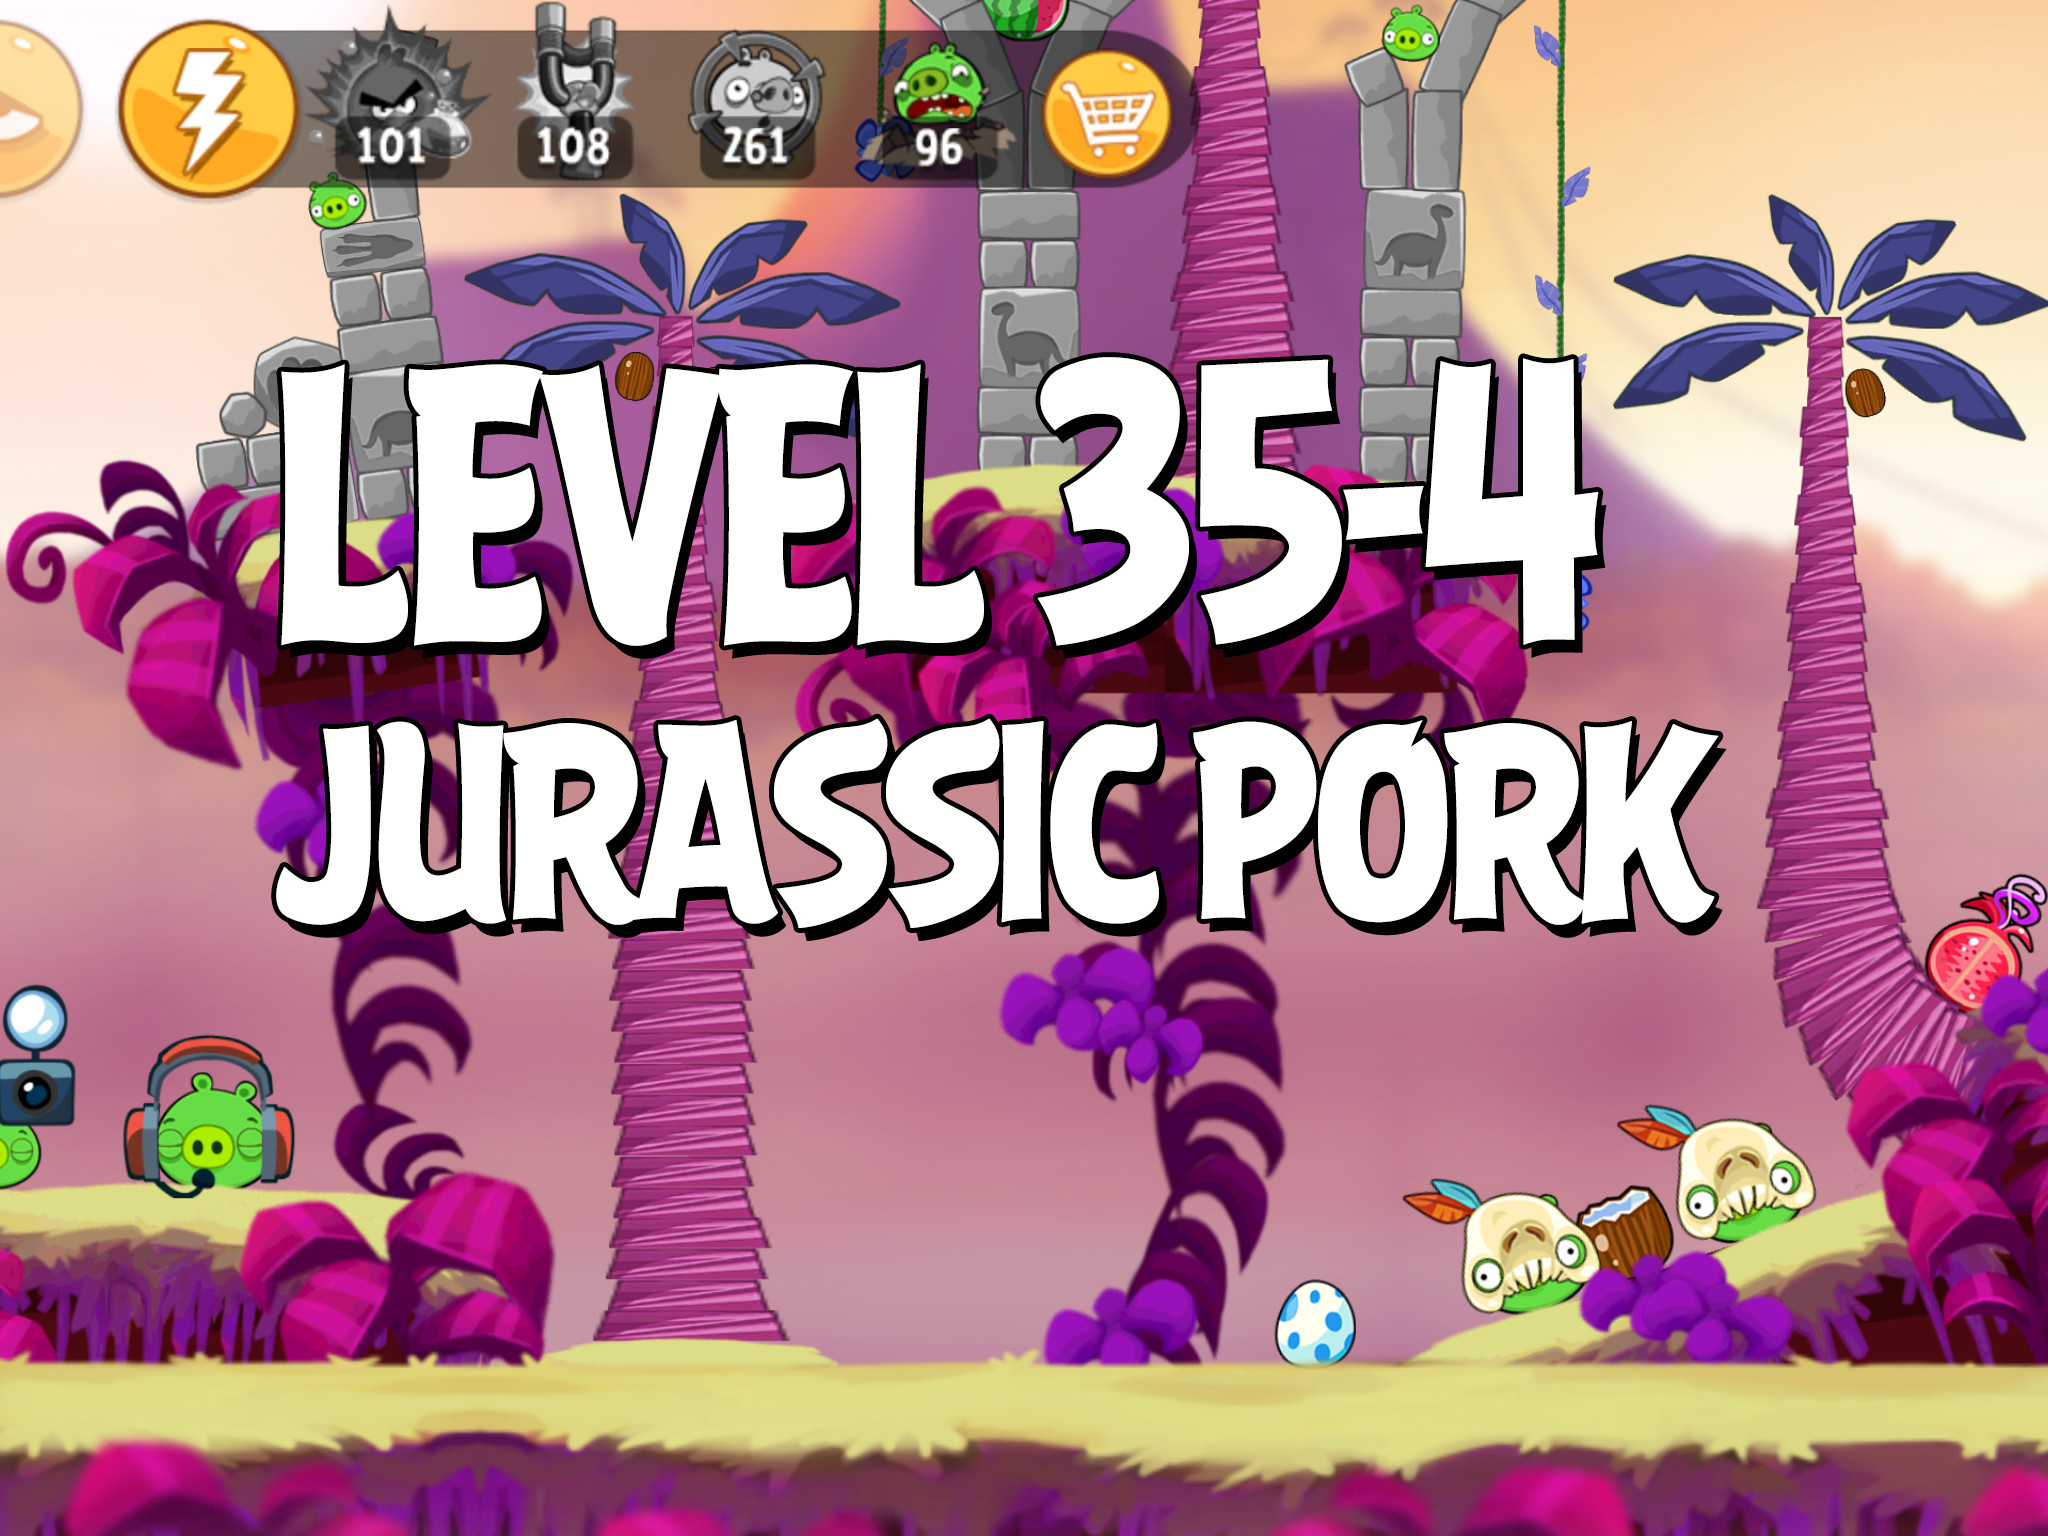 Angry-Birds-Jurassic-Pork-Level-35-4